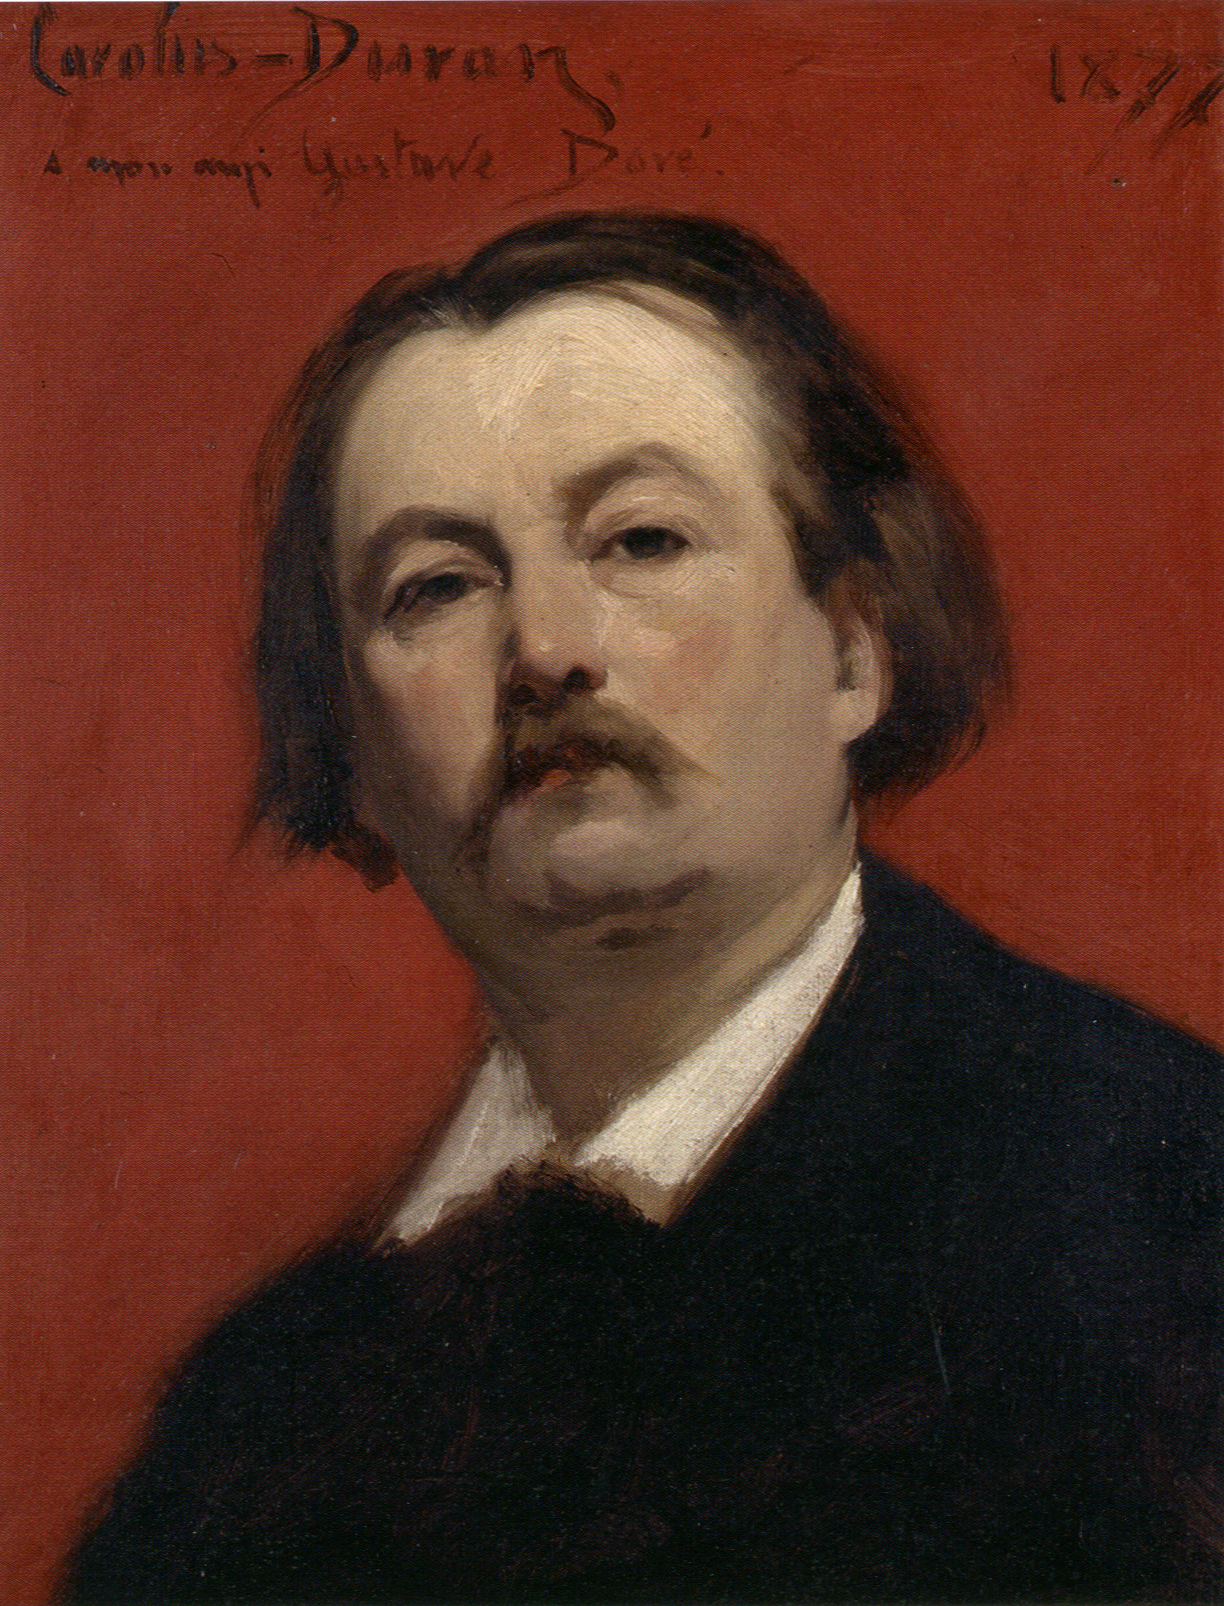 Gustave Doré - 6. Januar. 1832 - 23. Januar. 1883